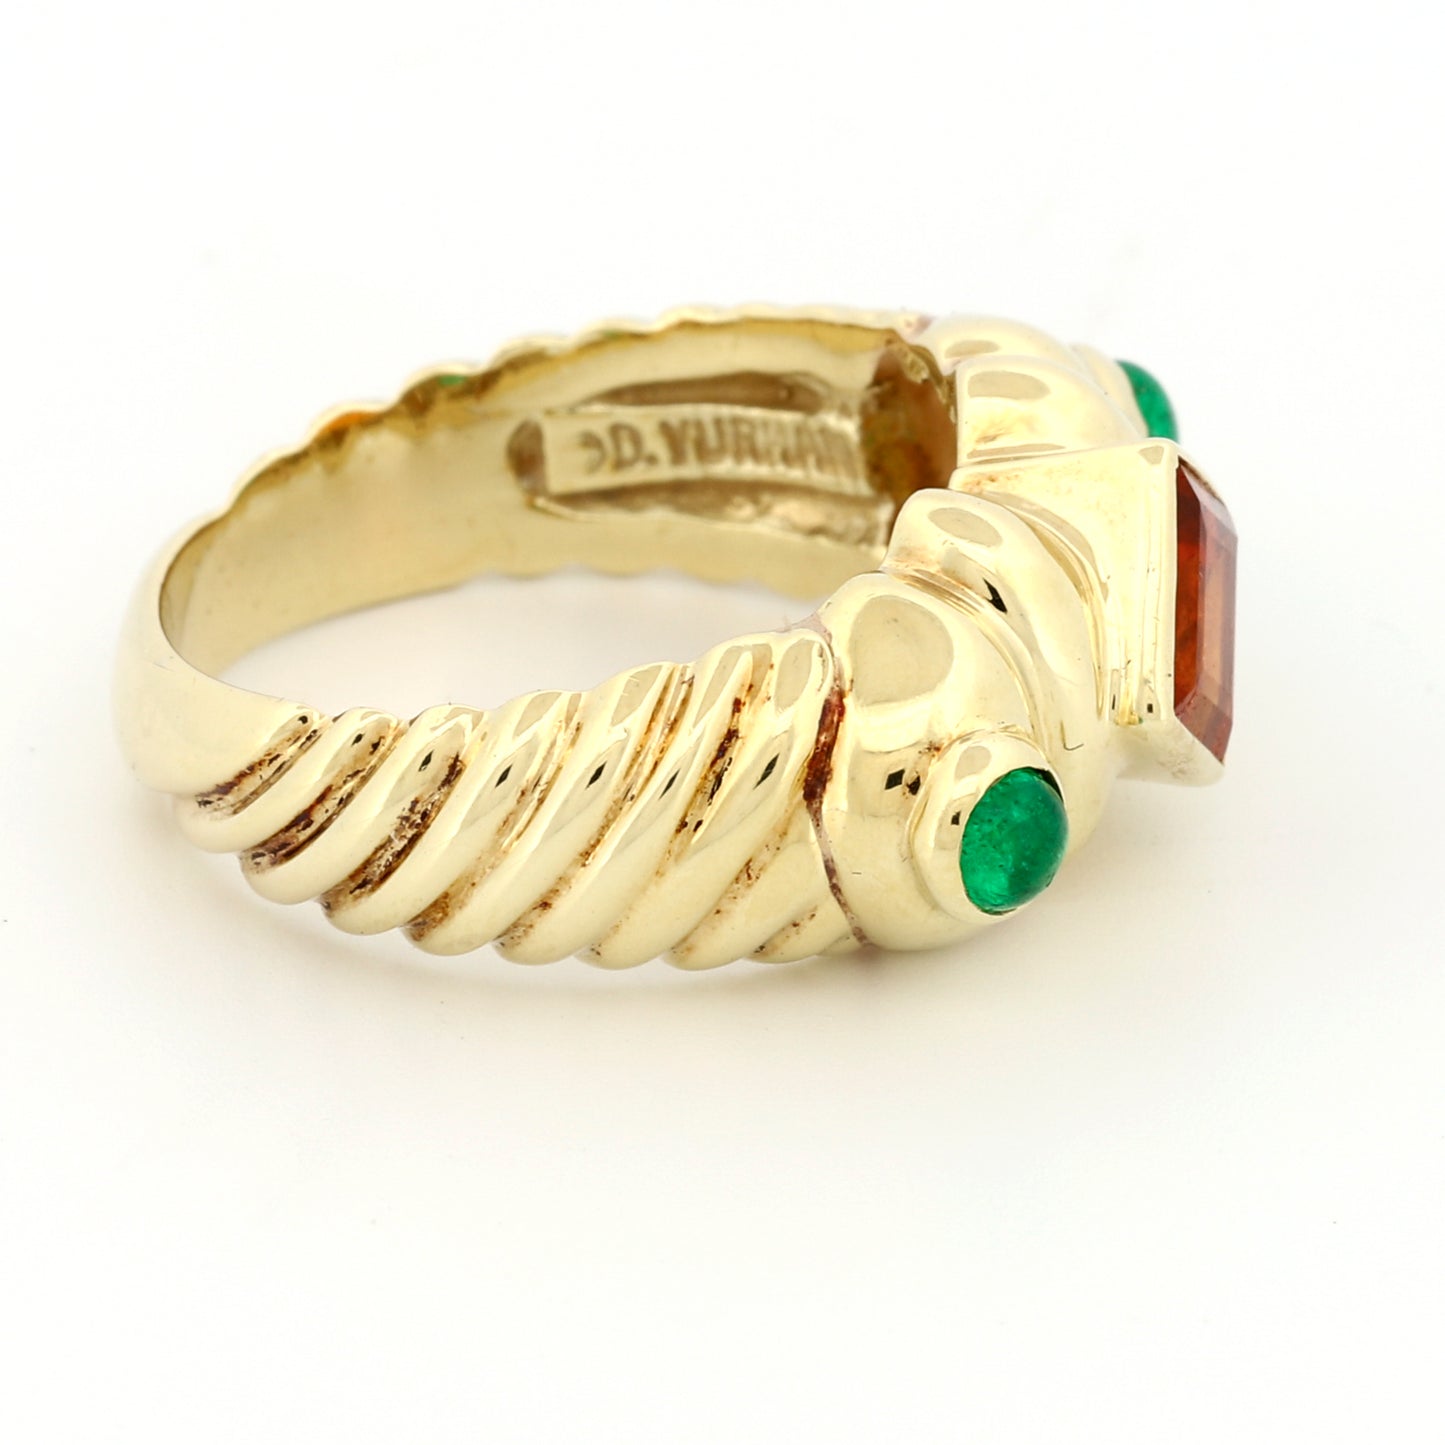 David Yurman Vintage Renaissance Ring in 14k Gold with Citrine & Emerald